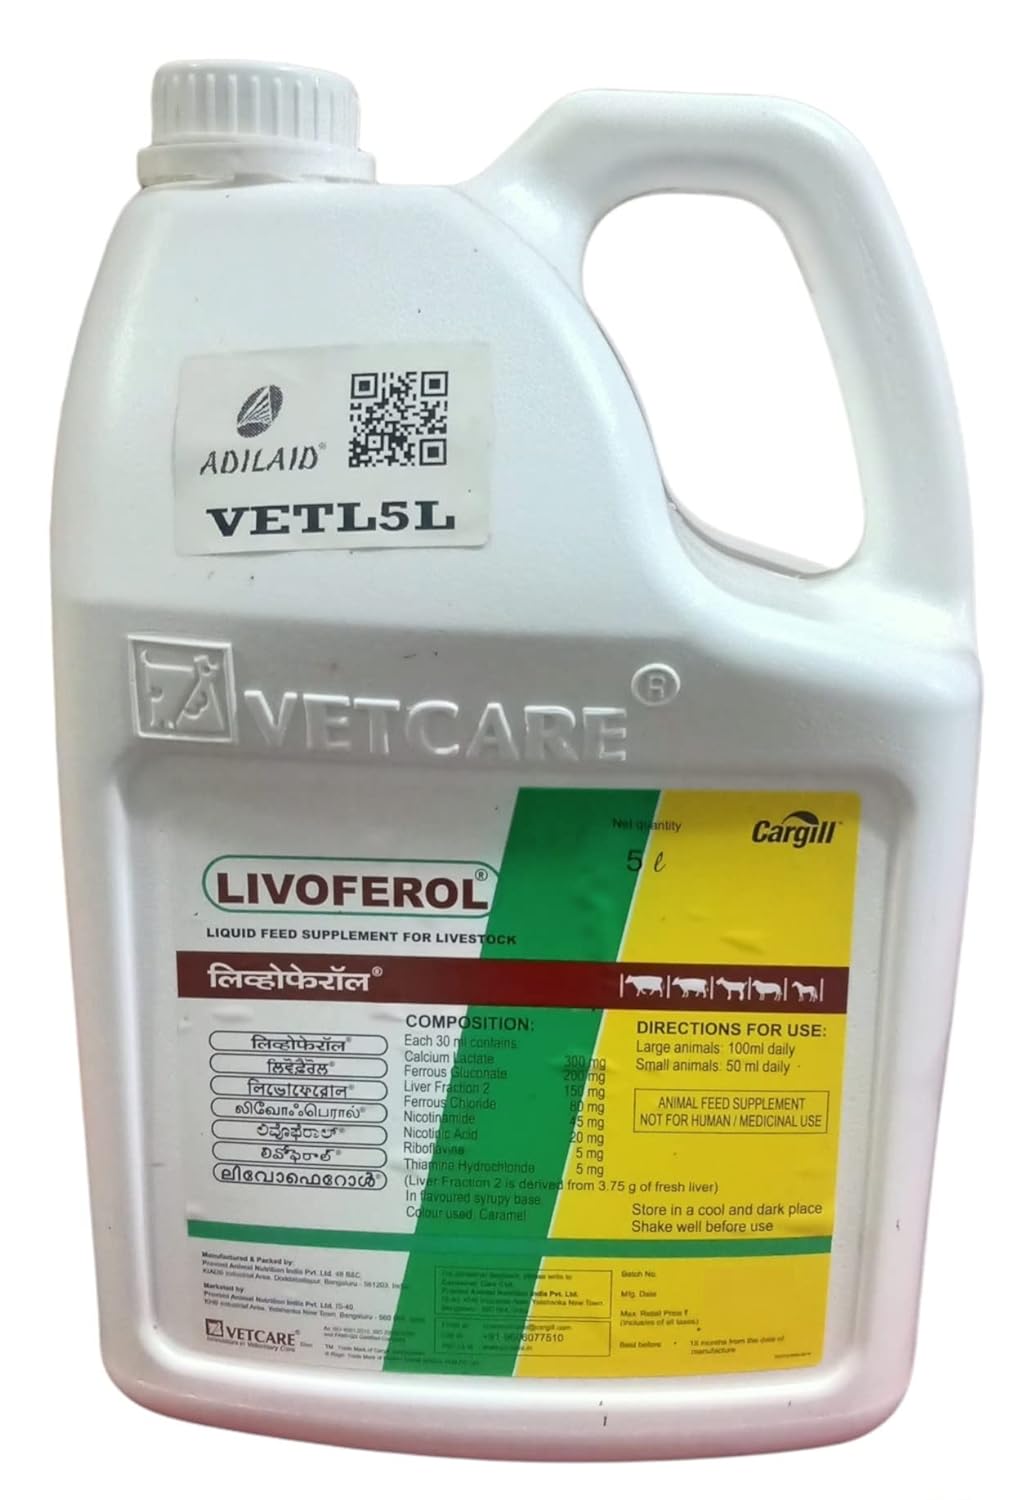 Livoferol liver